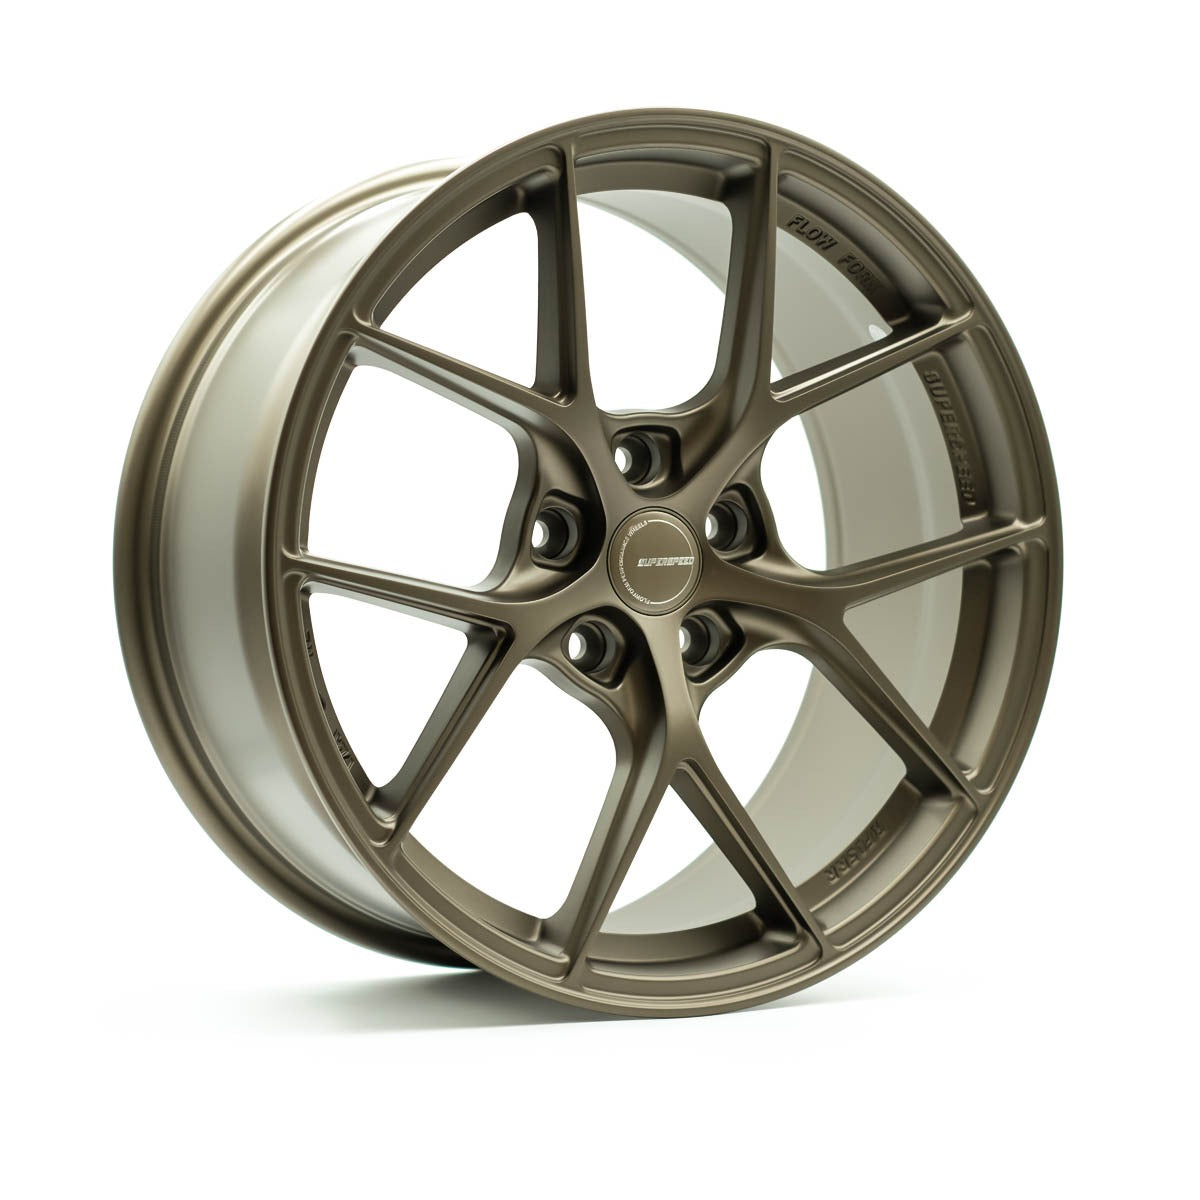 Superspeed FlowForm RF05RR Alloy Wheel (Satin Bronze) — 18"